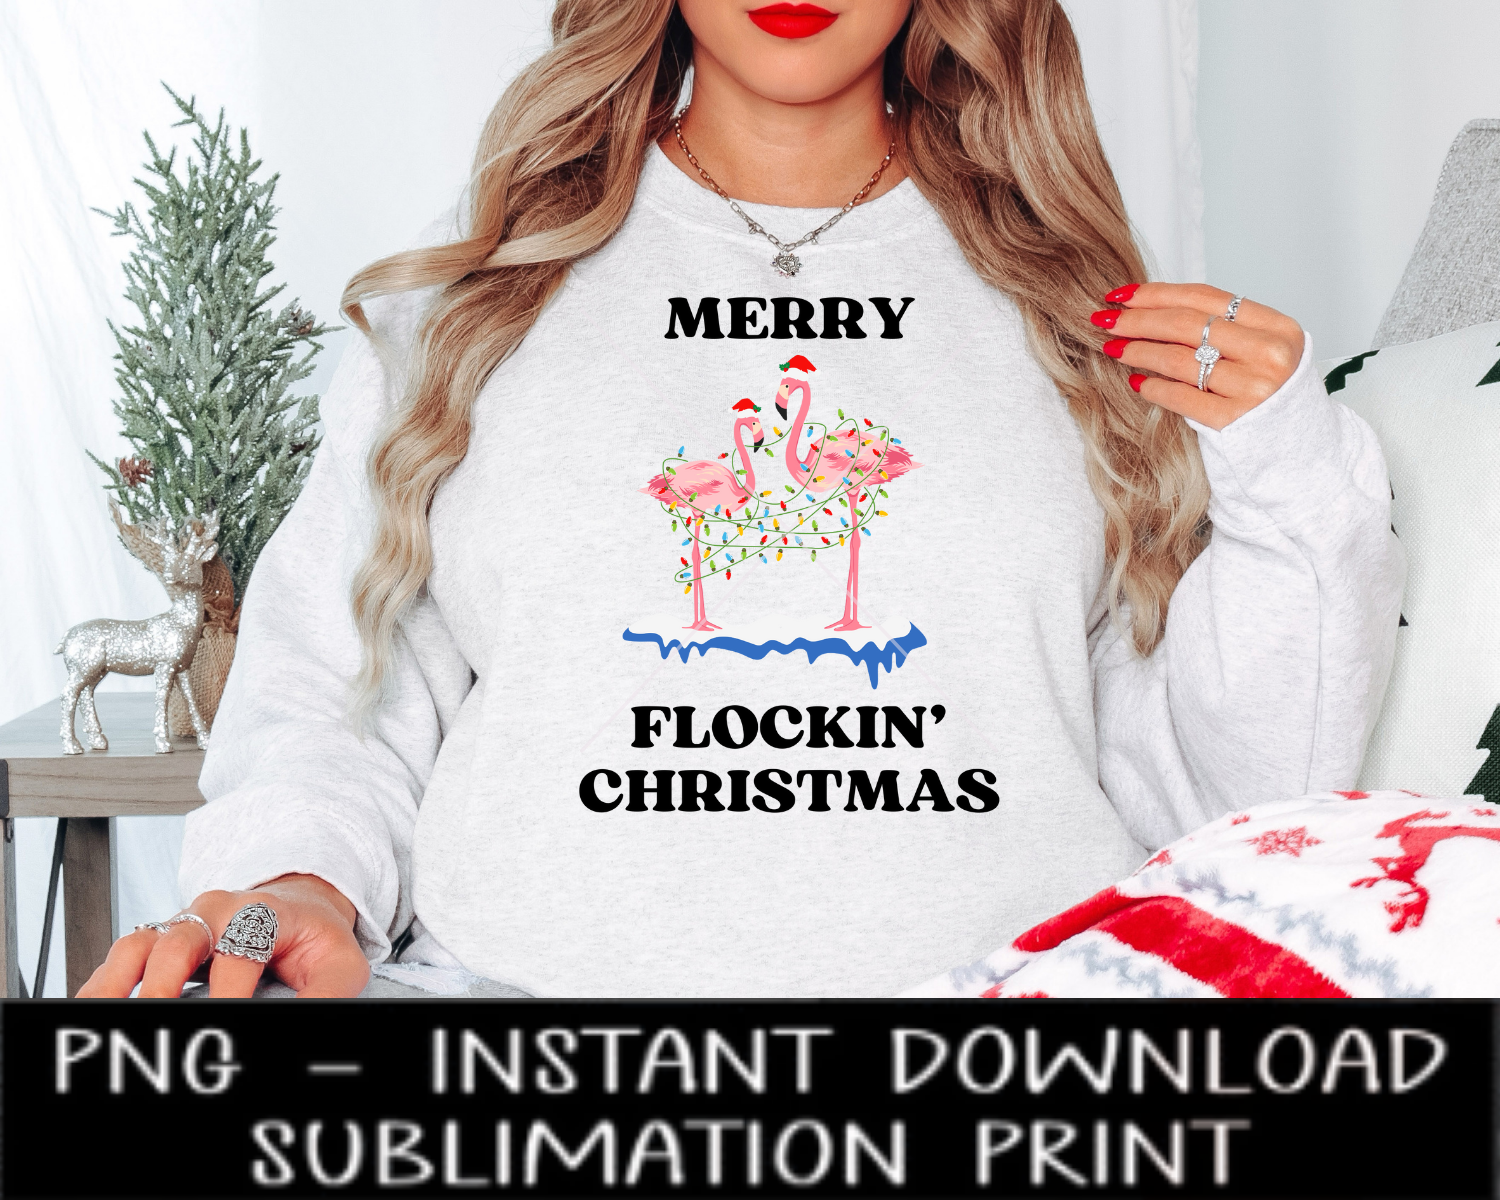 Merry Flockin Christmas PNG, Christmas Flamingo UV Dtf File, PNG Digital Design, Sublimation PnG, Instant Download, Waterslide Decal